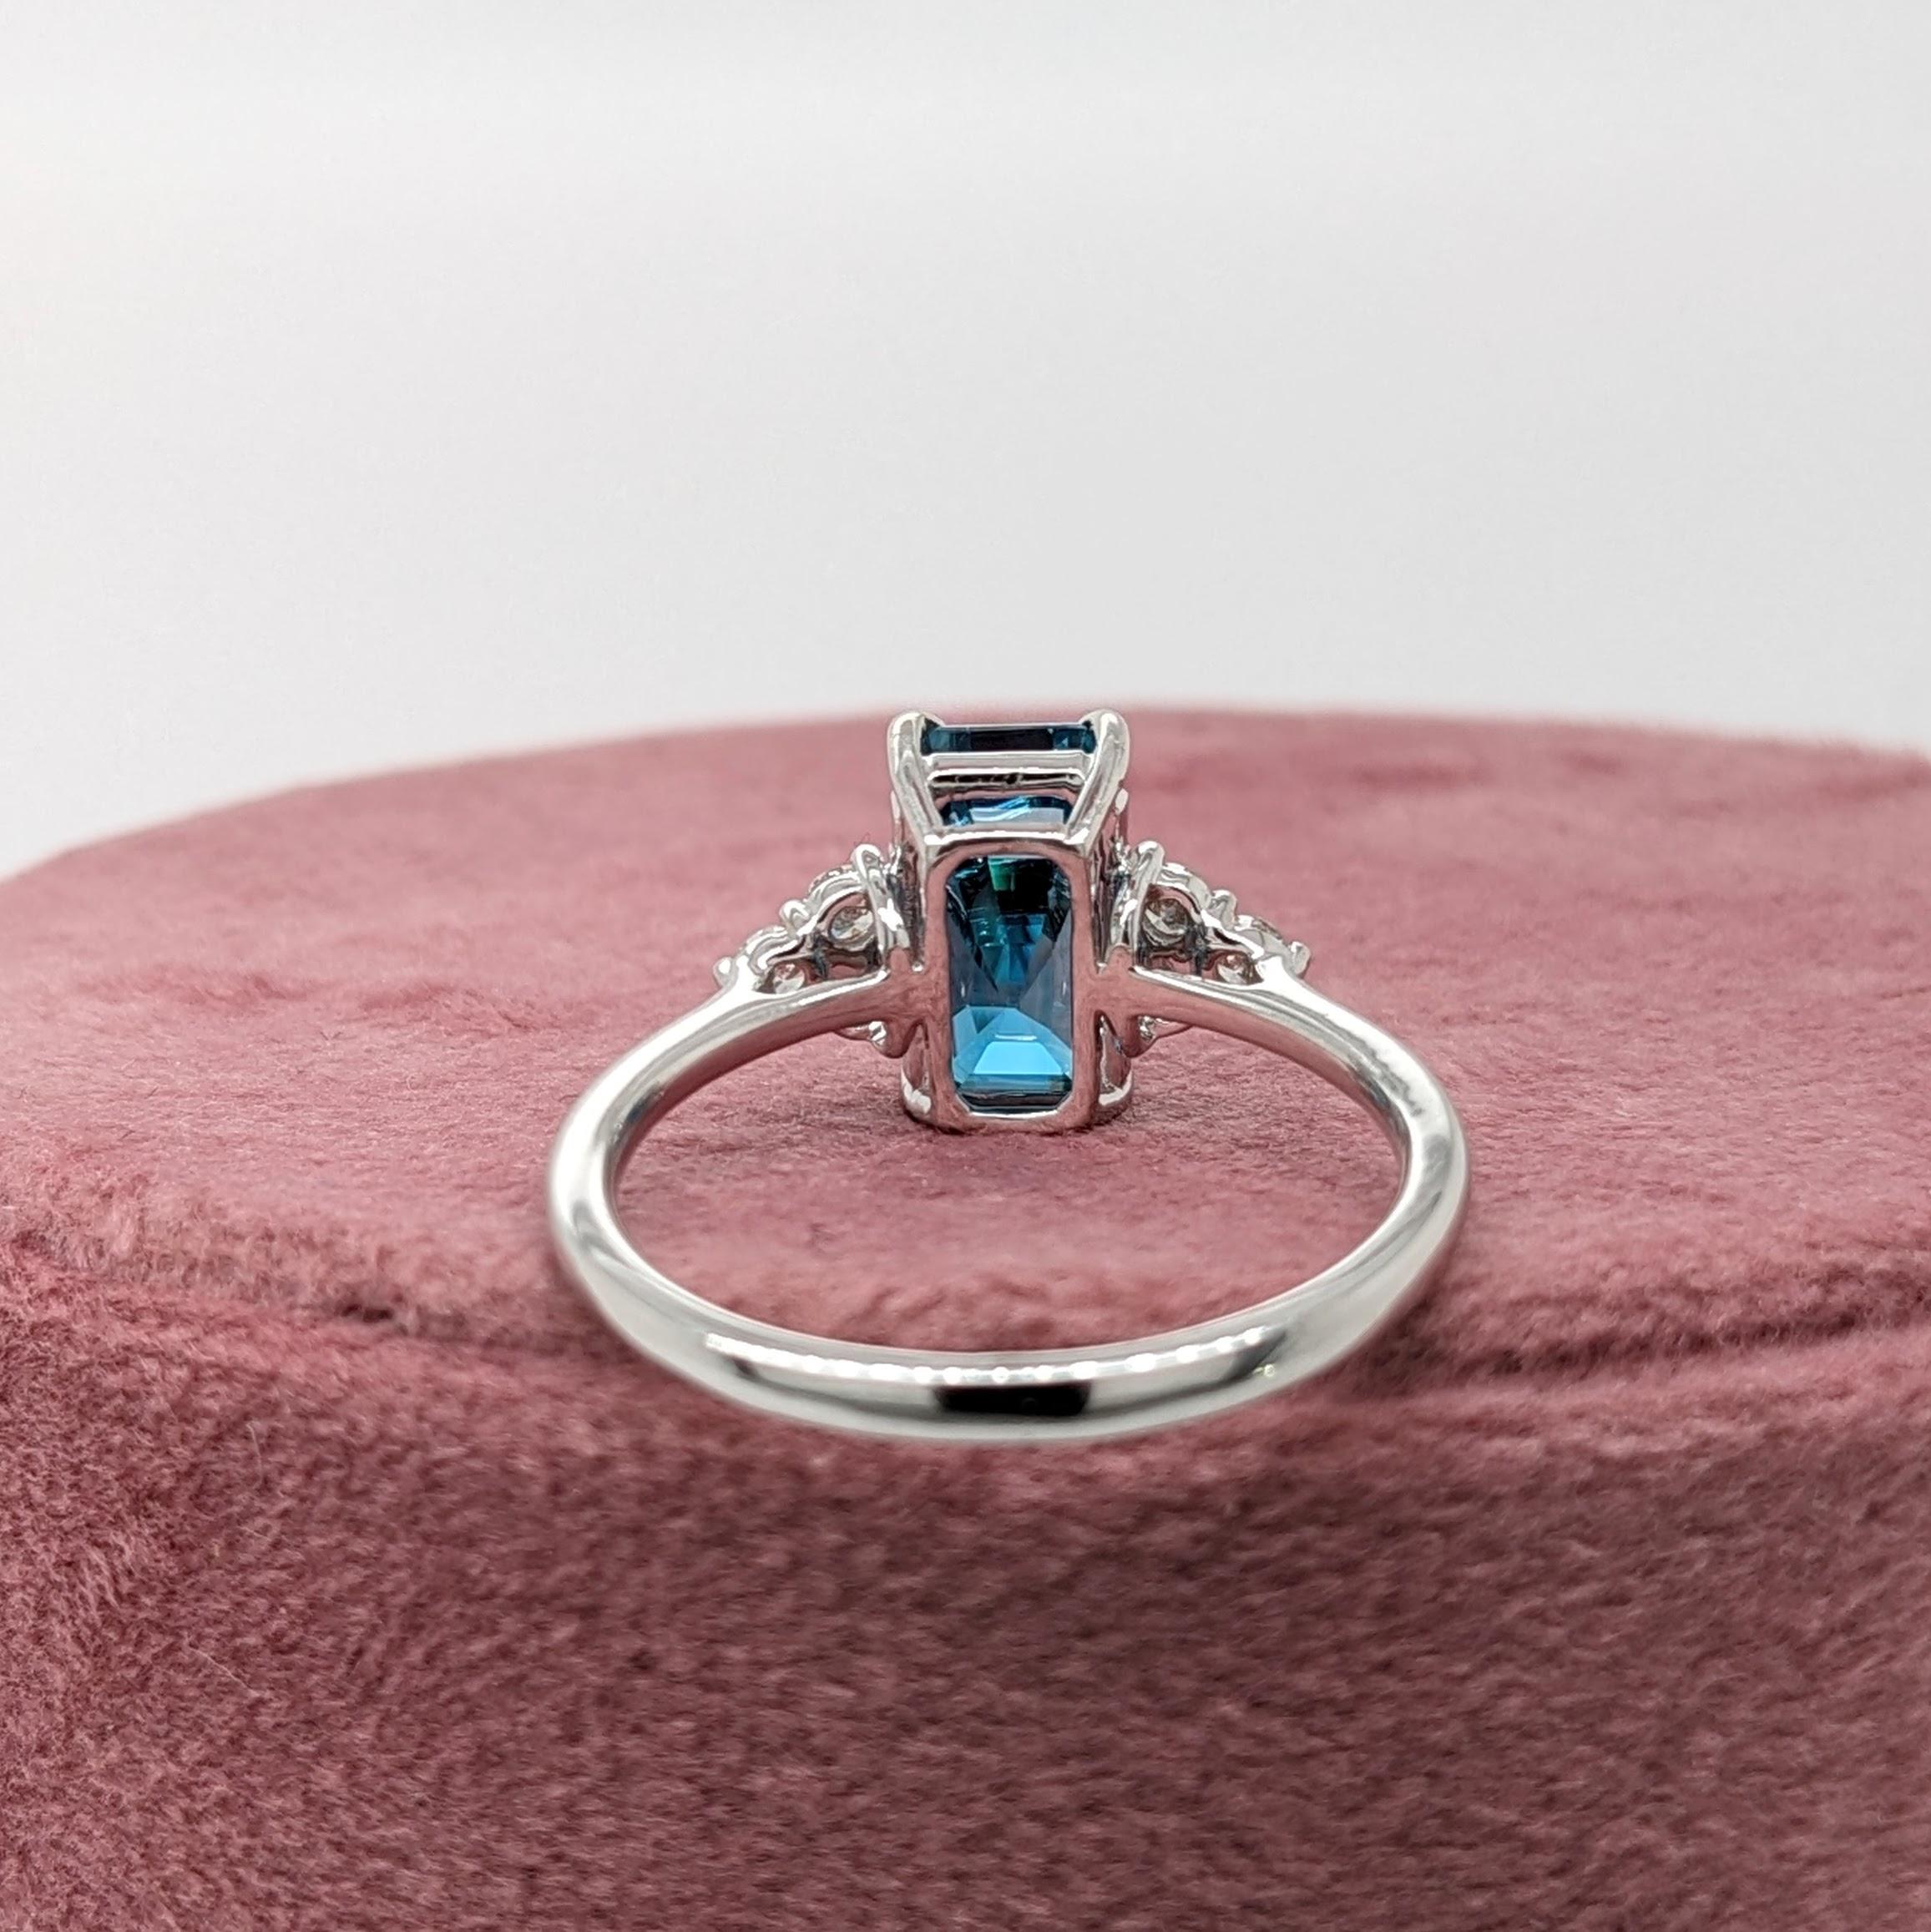 Women's 4.21ct Blue Zircon w Diamond Accents in 14K White Gold Emerald Cut 9.5x6mm